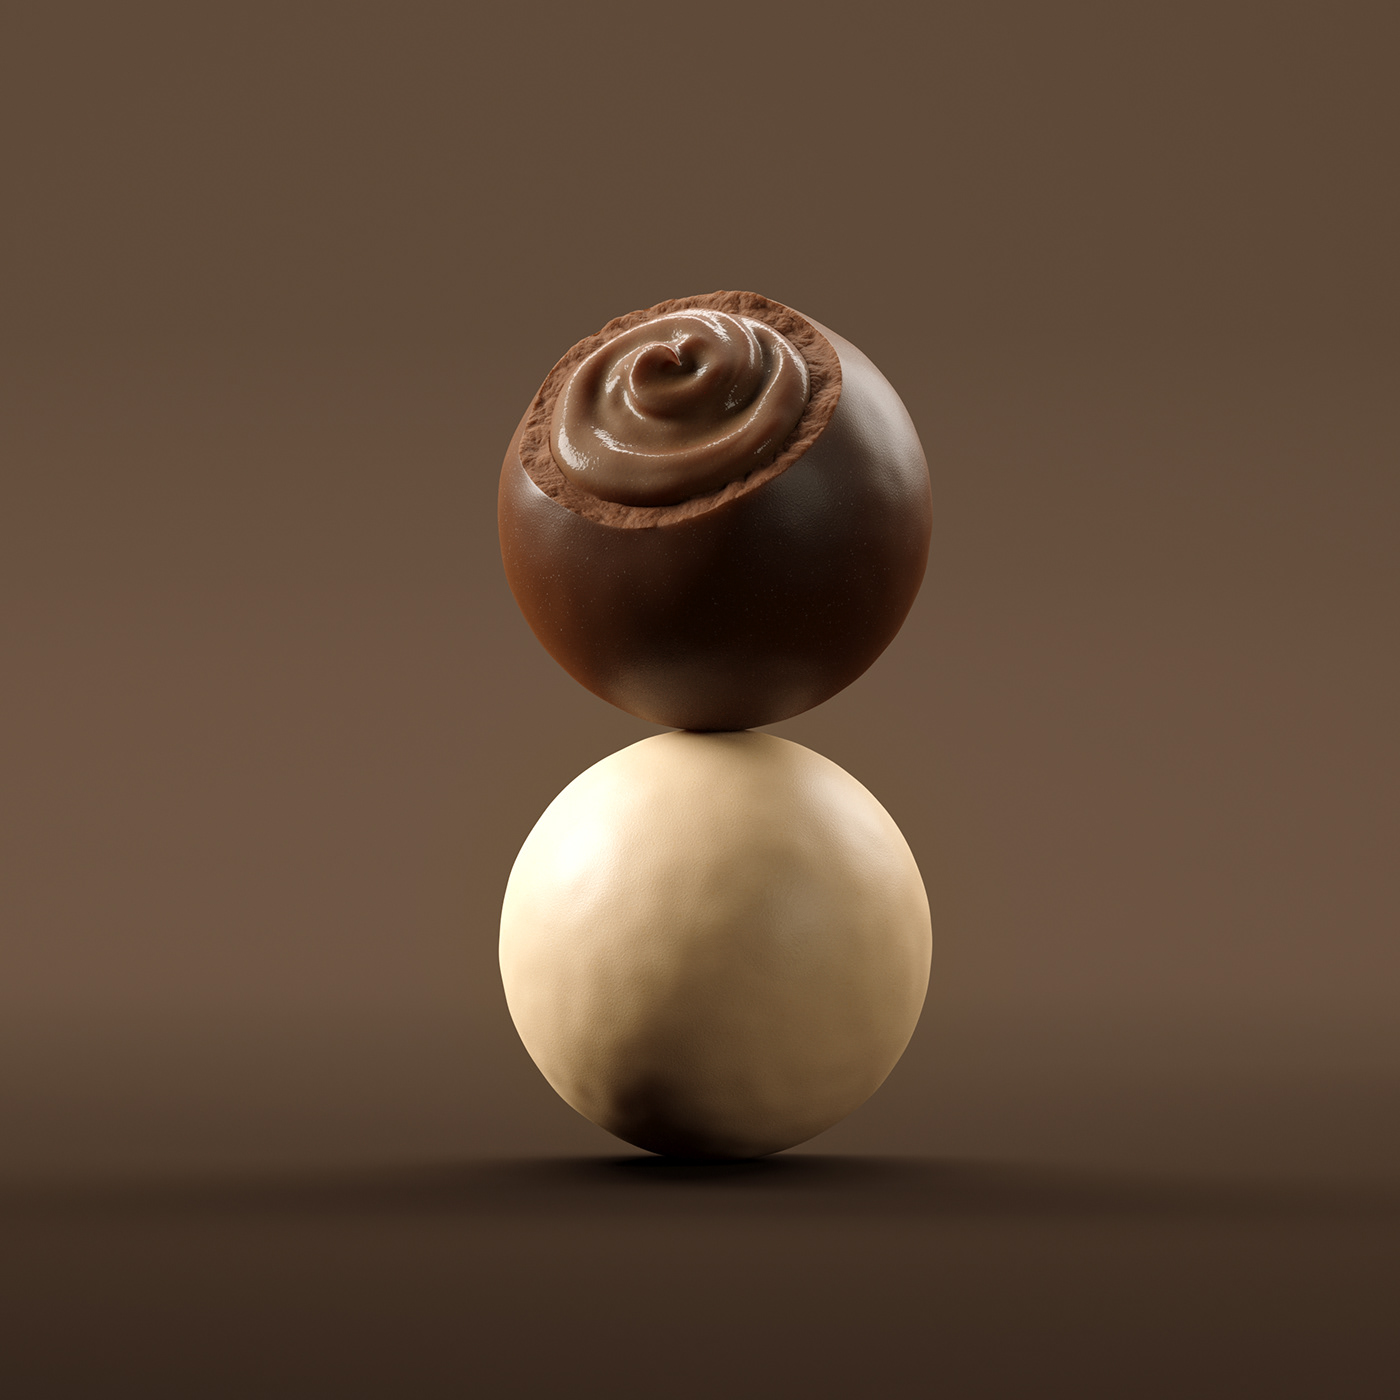 3D 3dFood Borges cgifood chocolate Food  pedro white chocolate